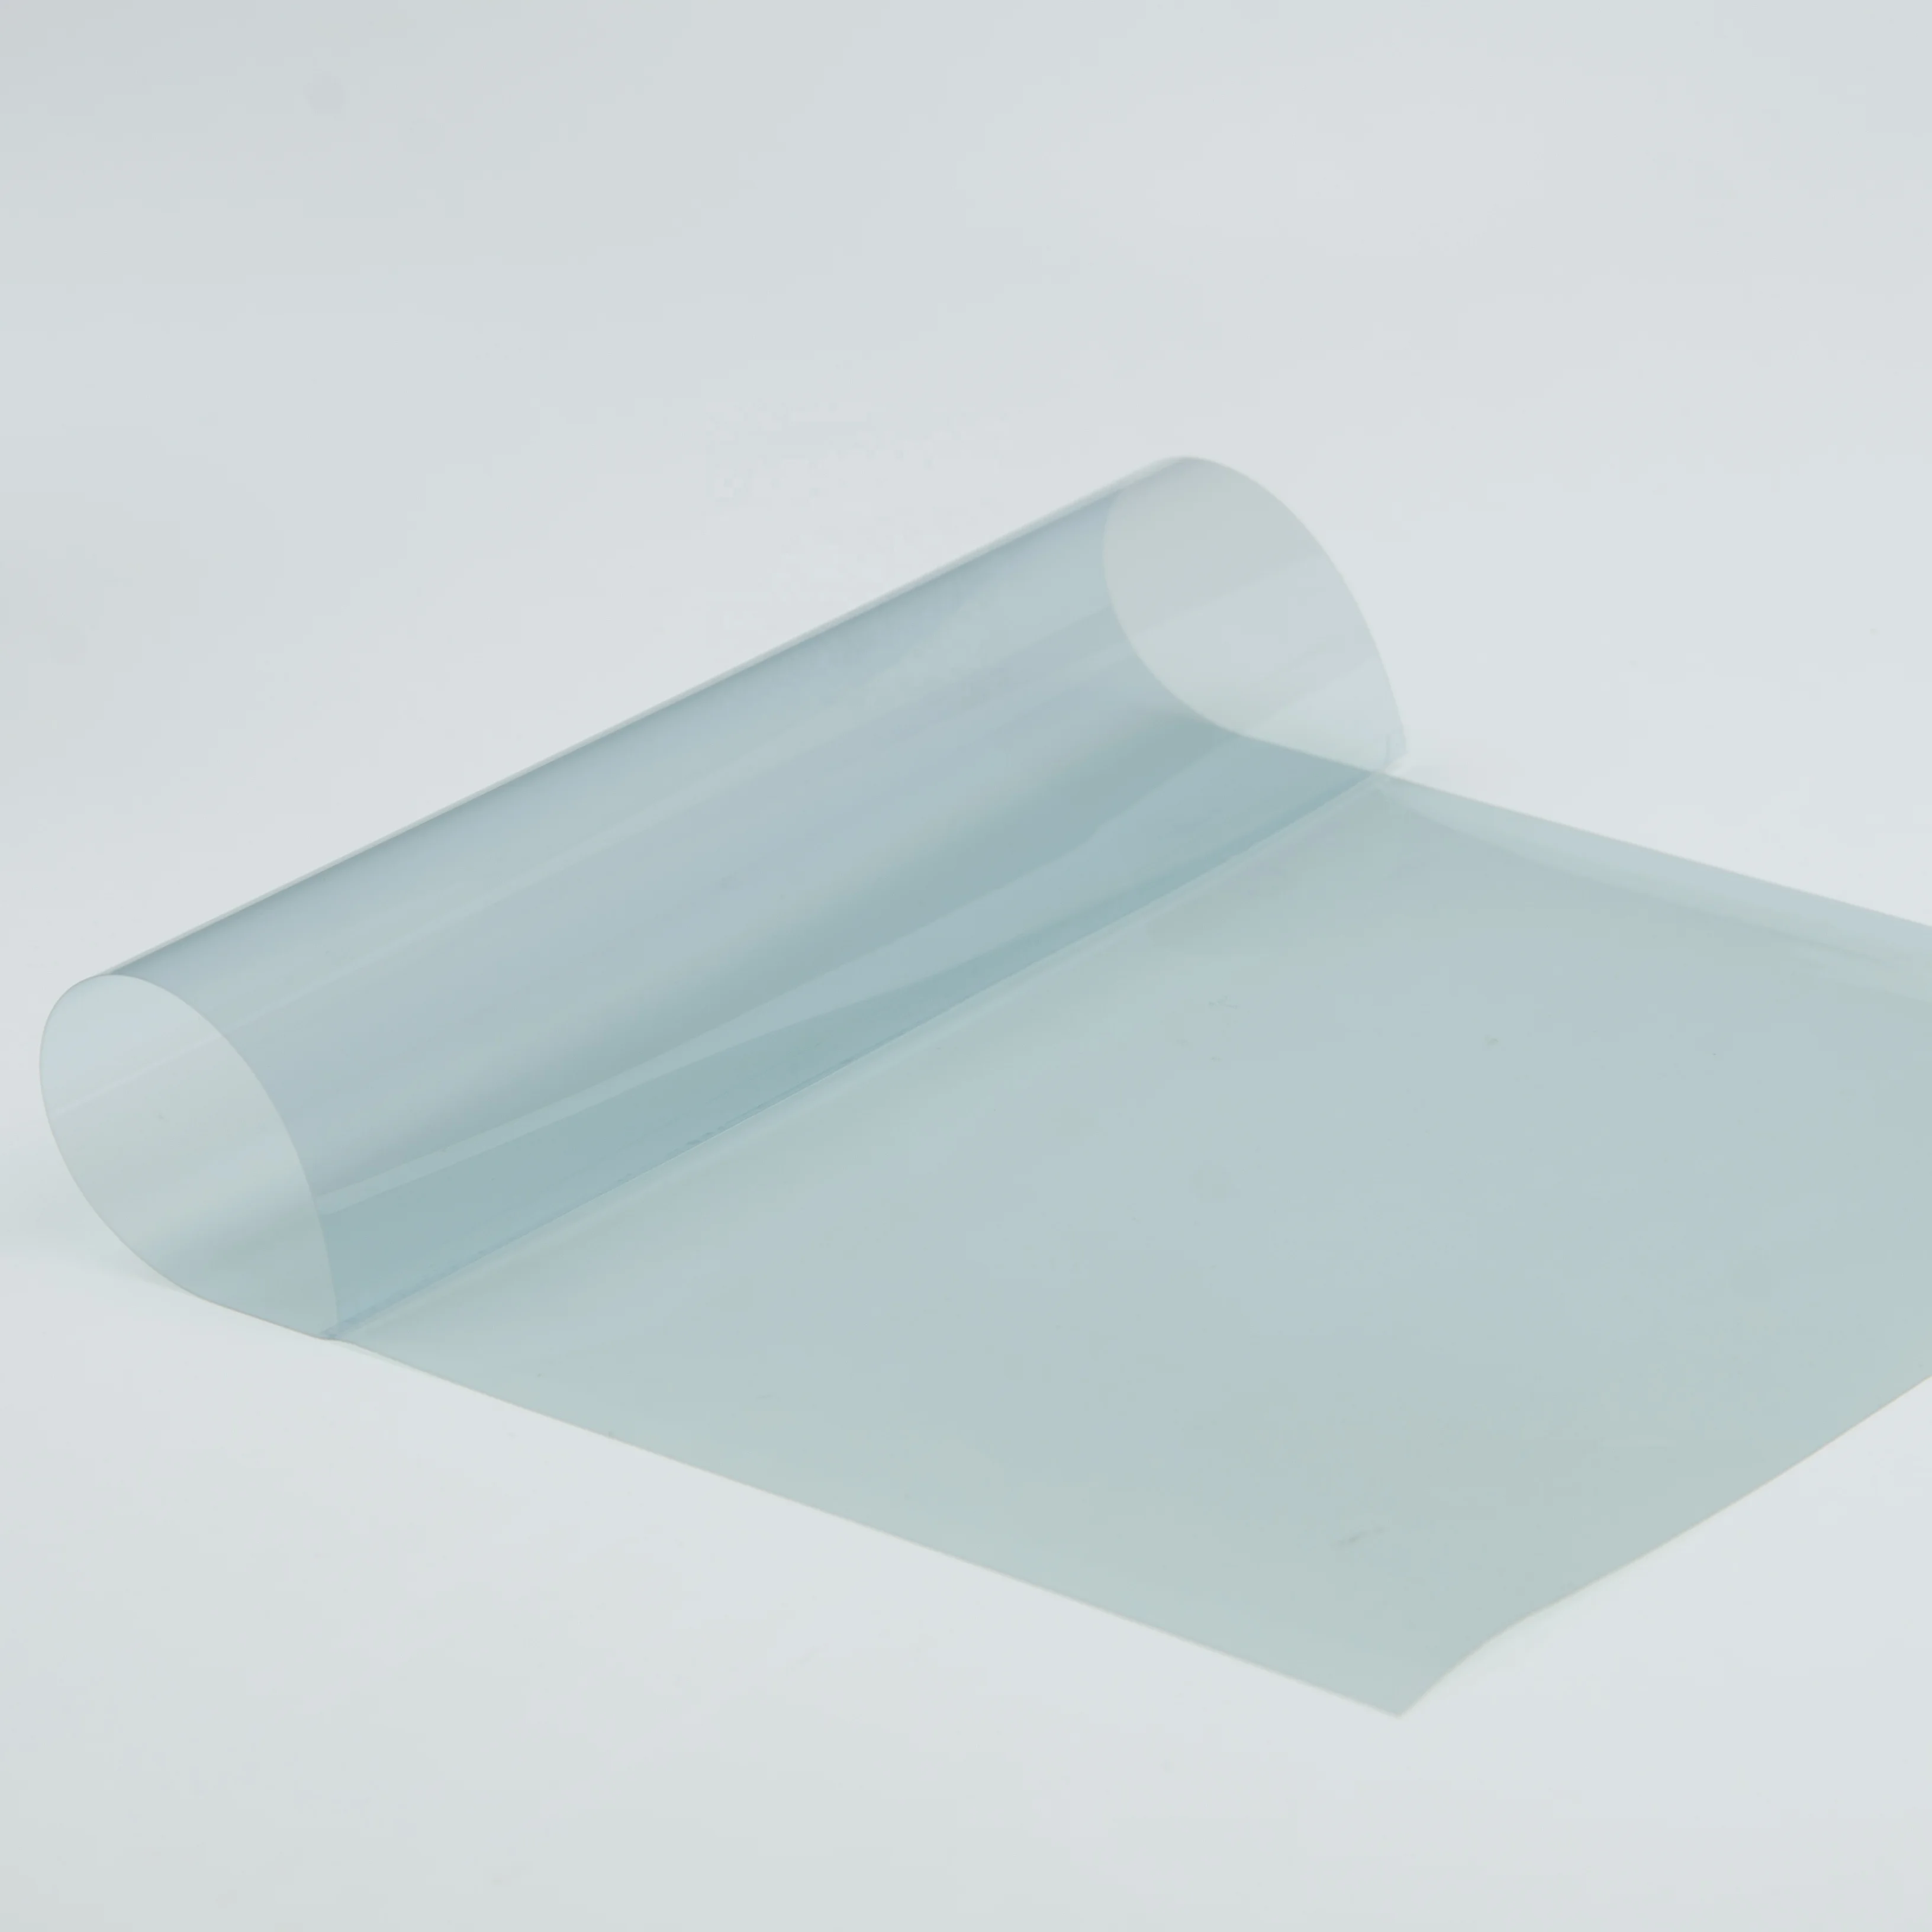 

80% VLT super clear car window solar tint film foil for heat insulation UV IR rejection, Light blue